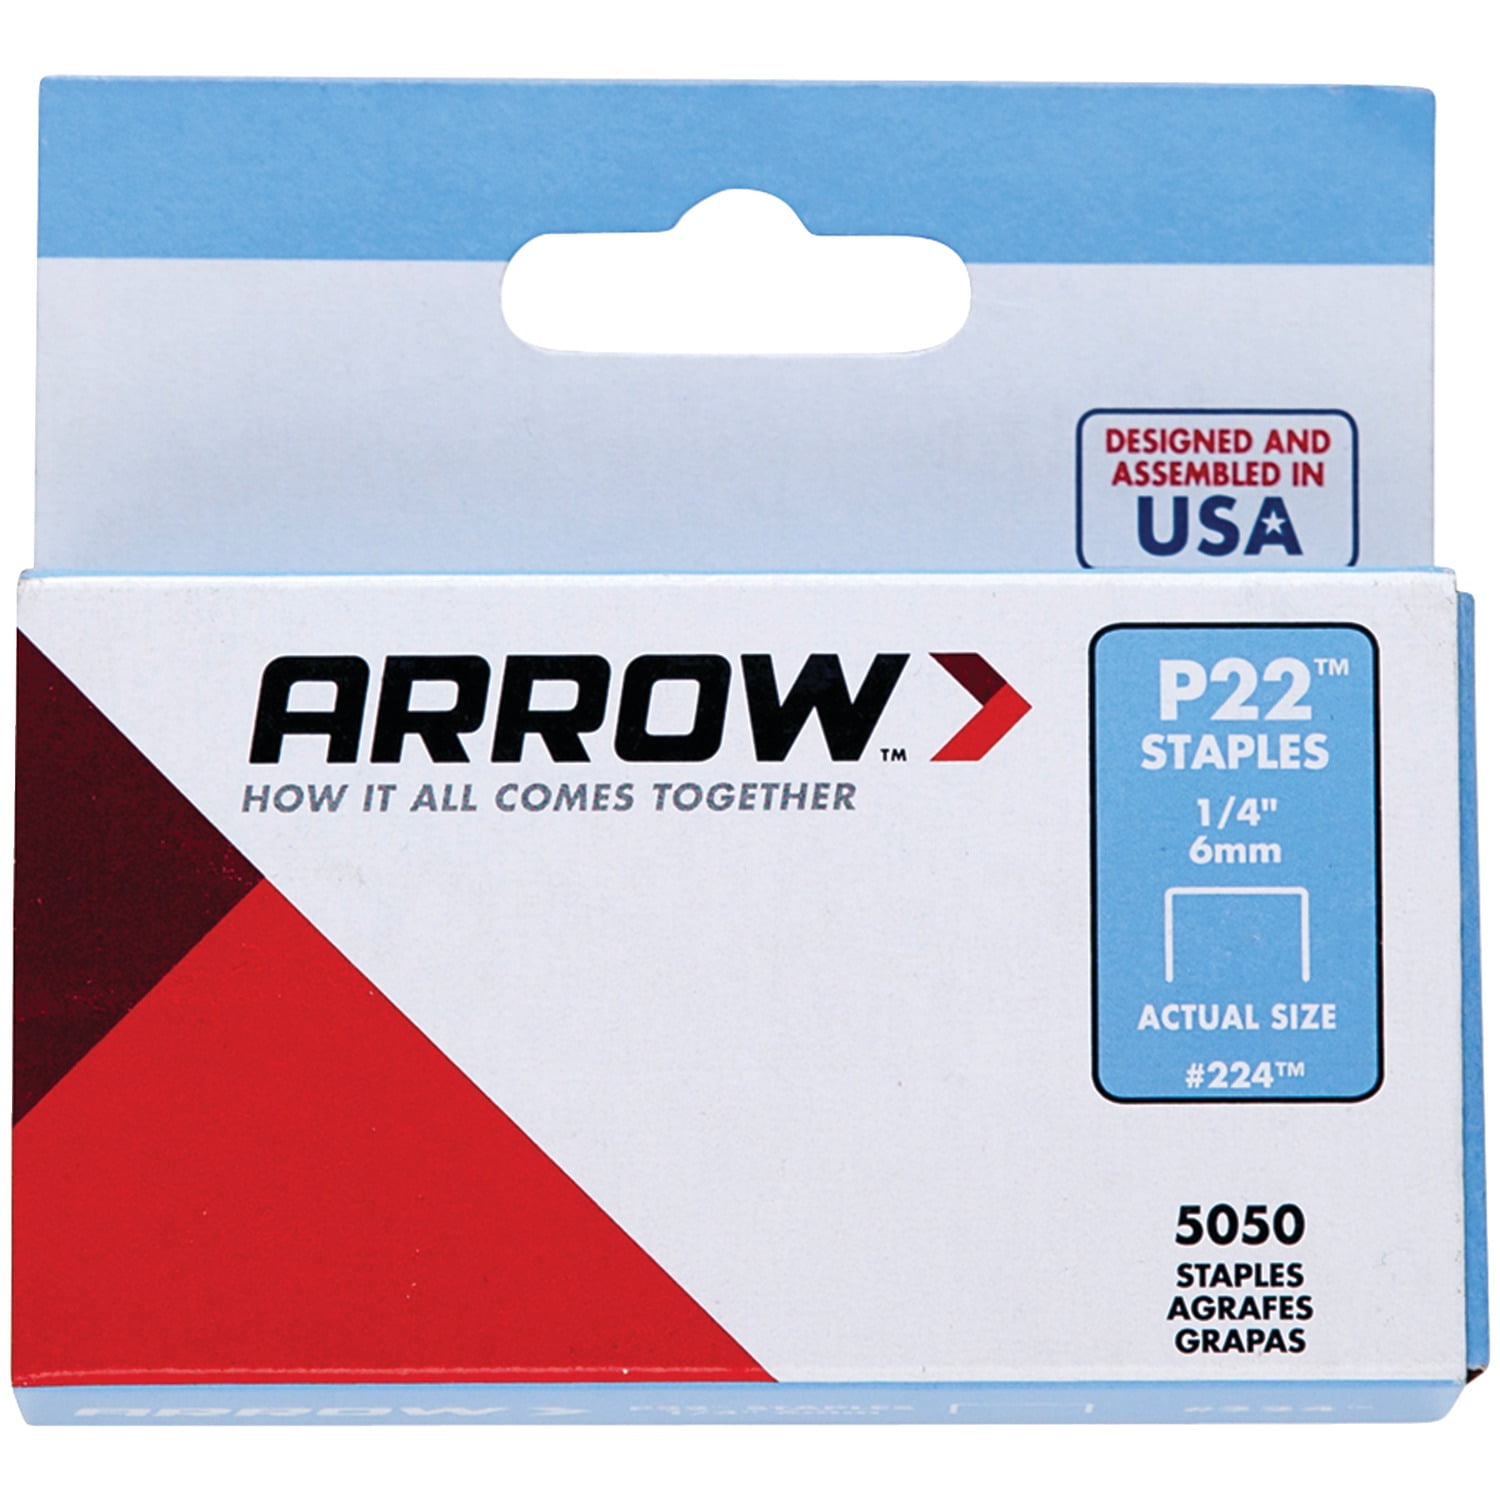 6 Pack Genuine Arrow P22 Staples #224 1/4 Inch 6 mm Staplers Fastener Staples 